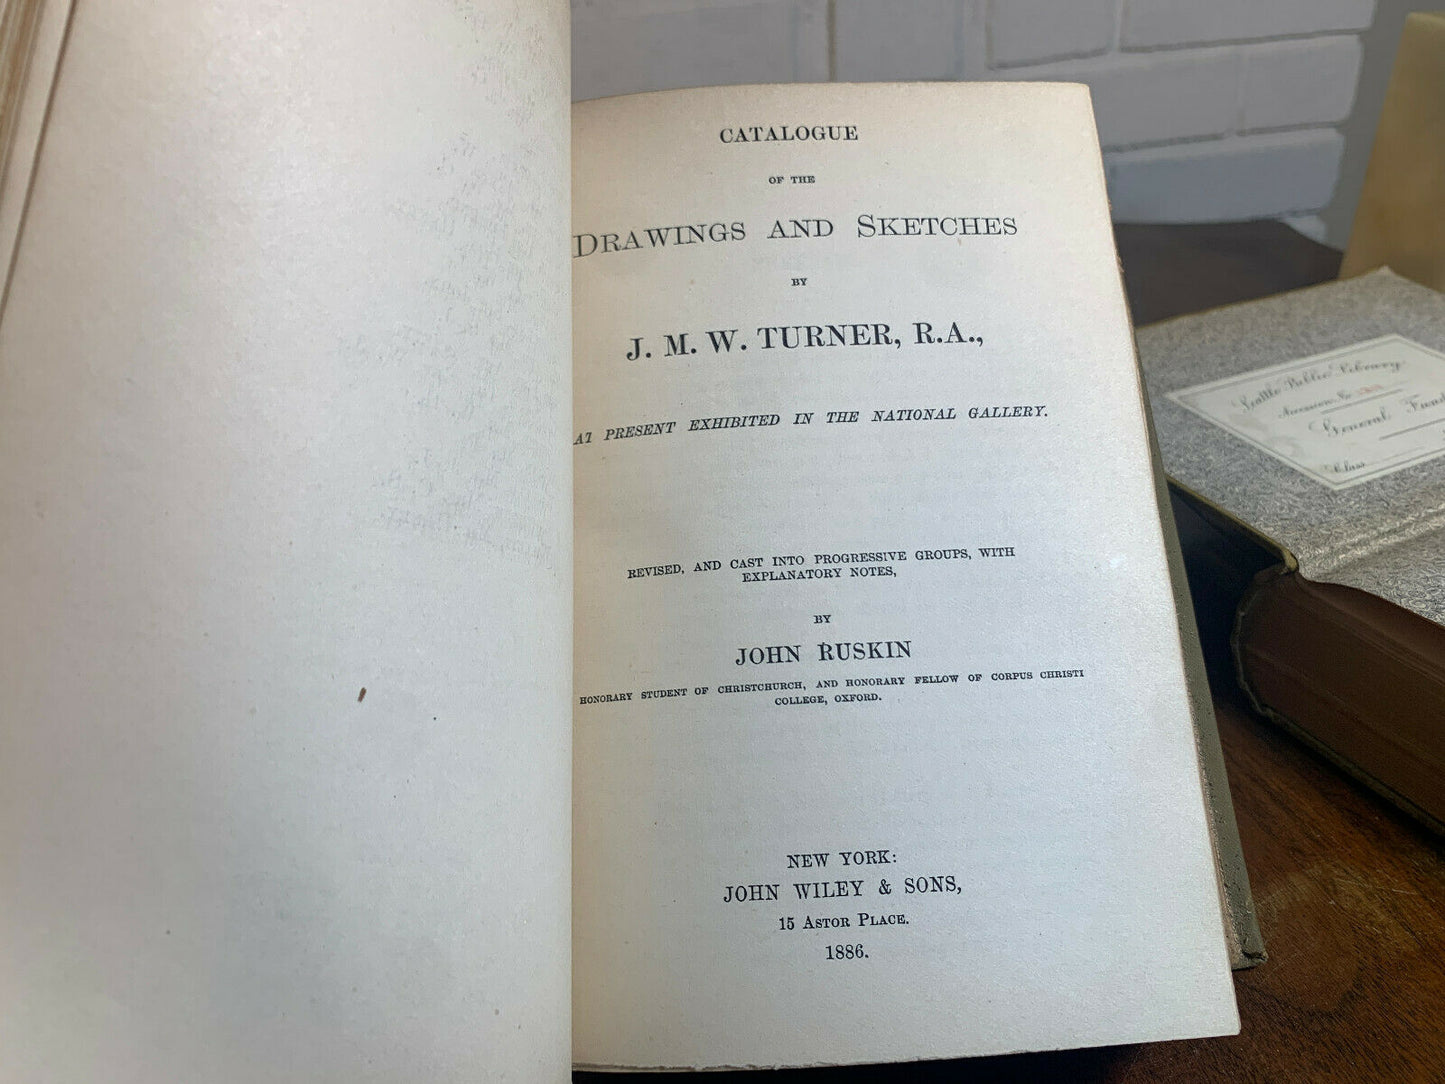 Works of John Ruskin: Popular Edition, Second Series 5 Volumes 1881 - 1886 (C10)